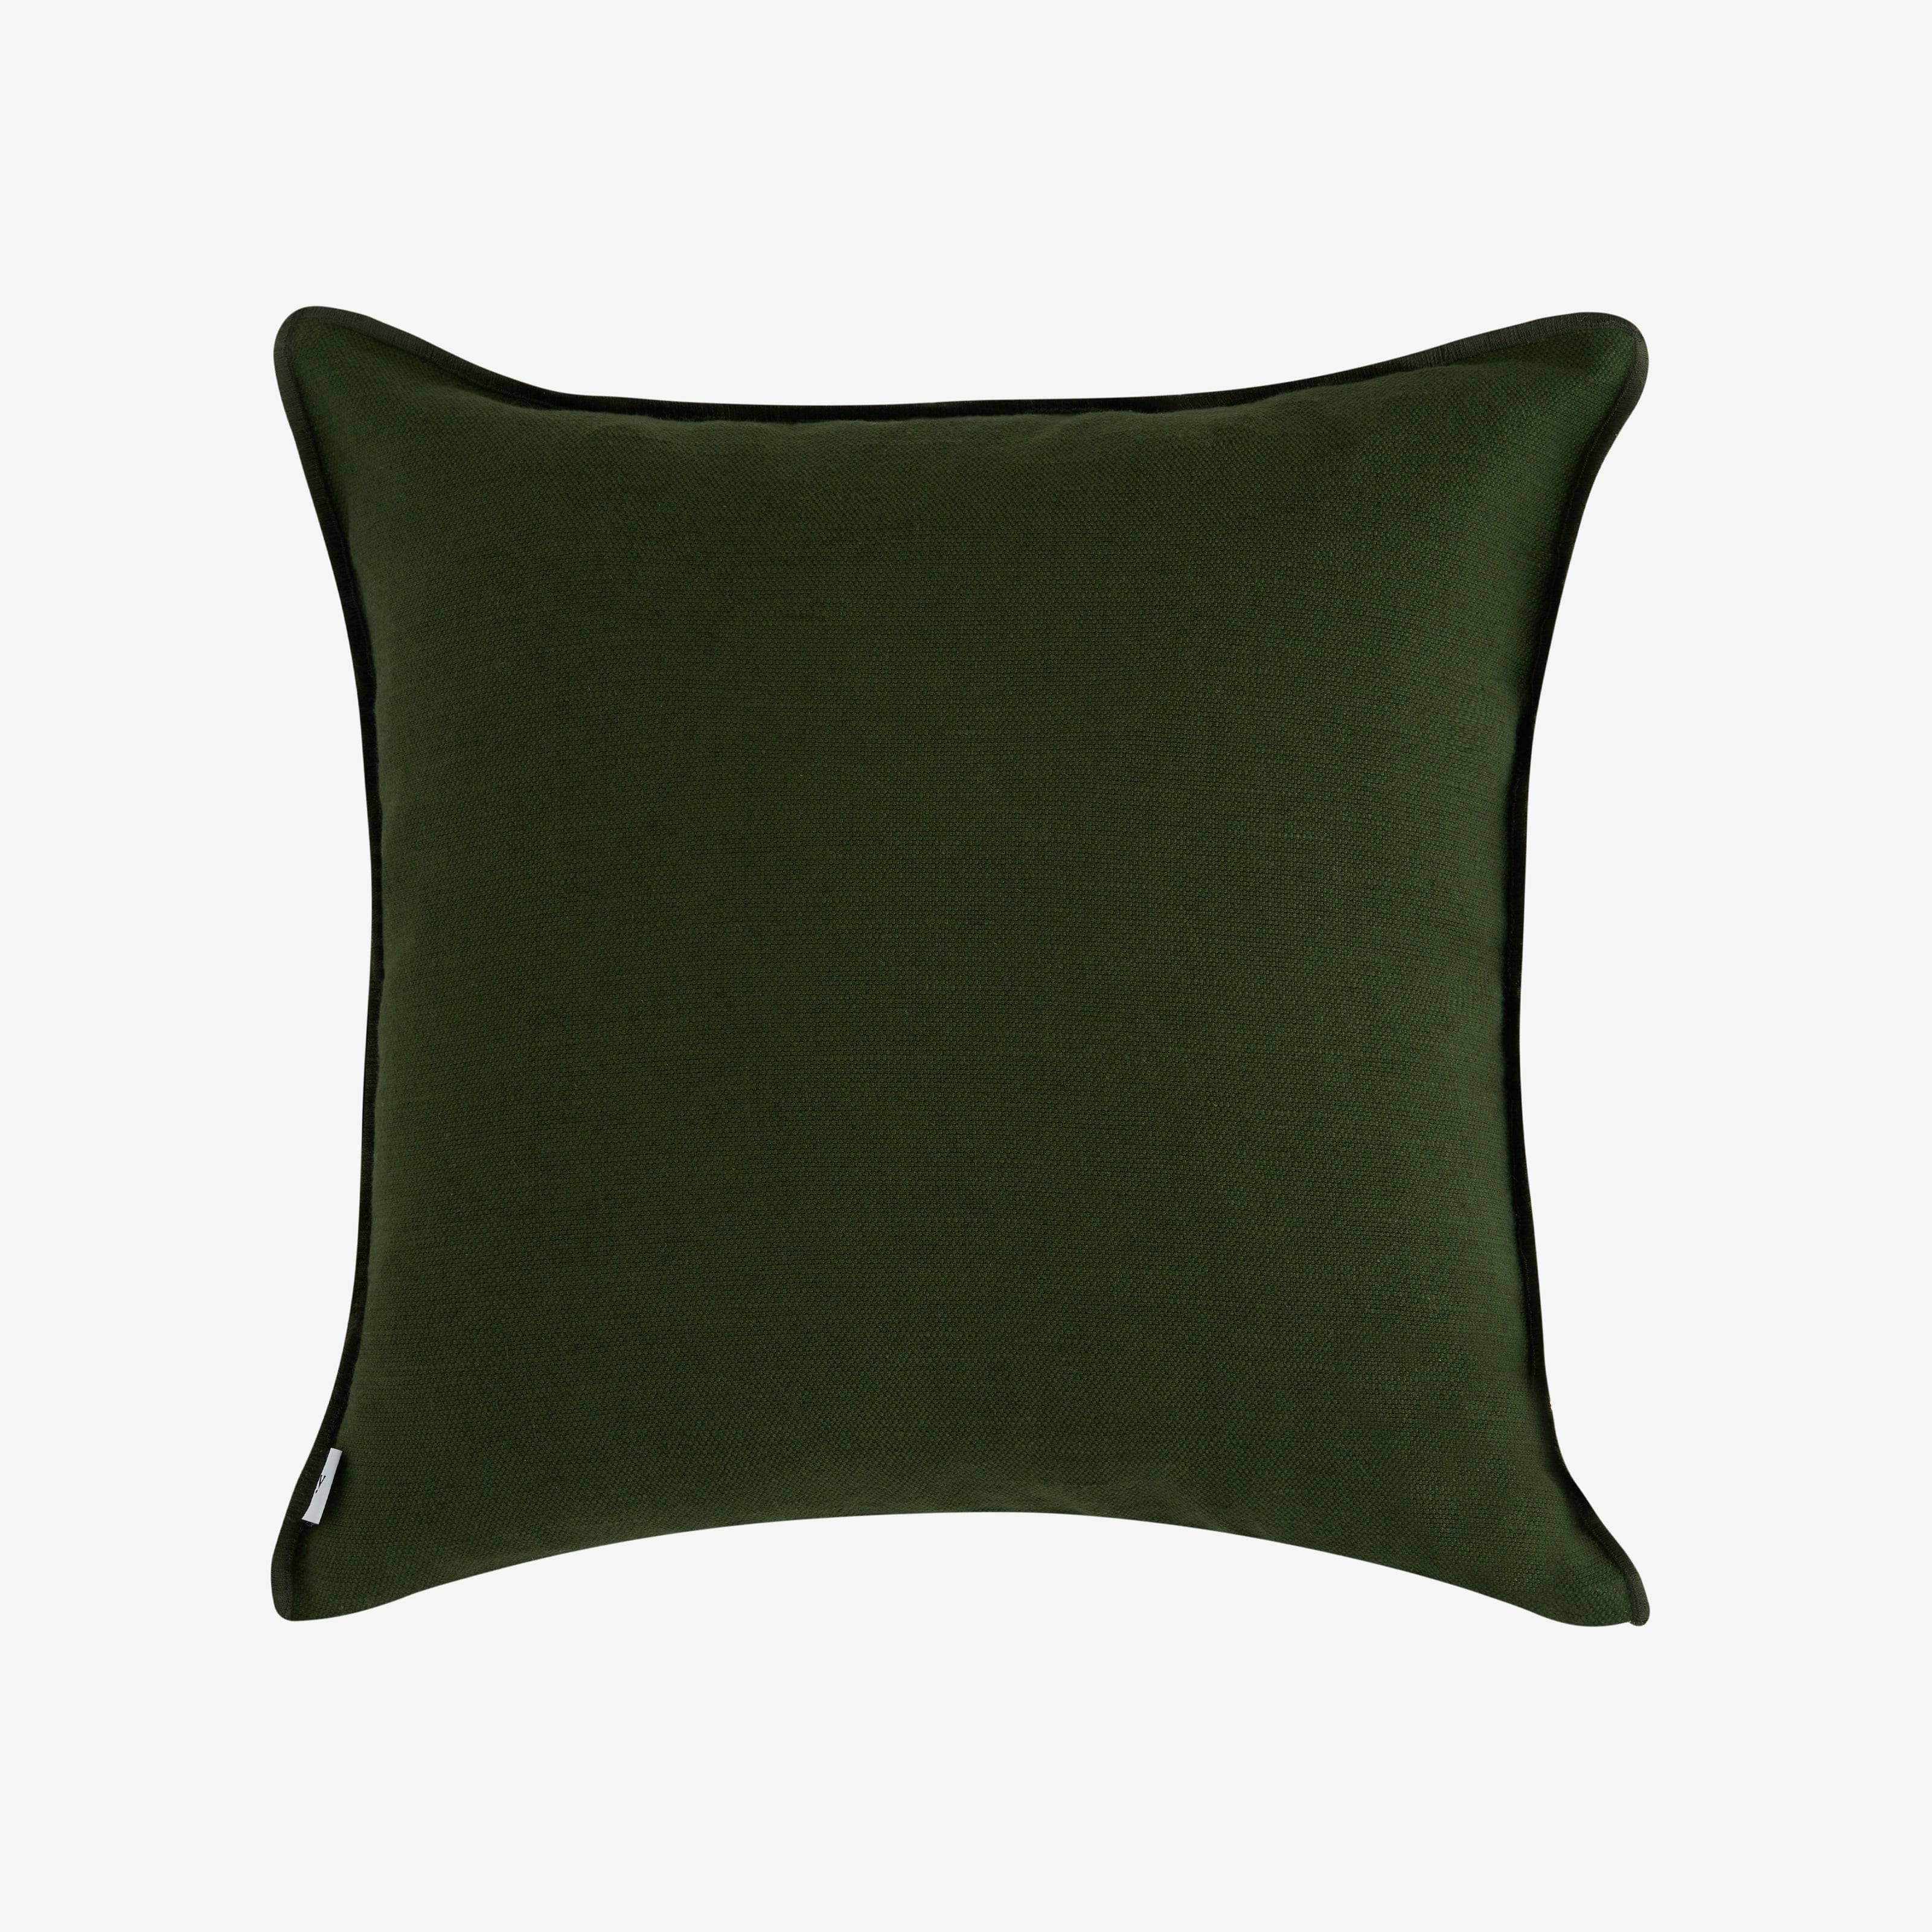 Lido Striped Linen Cushion Cover, Natural - Green, 45x45 cm - 2